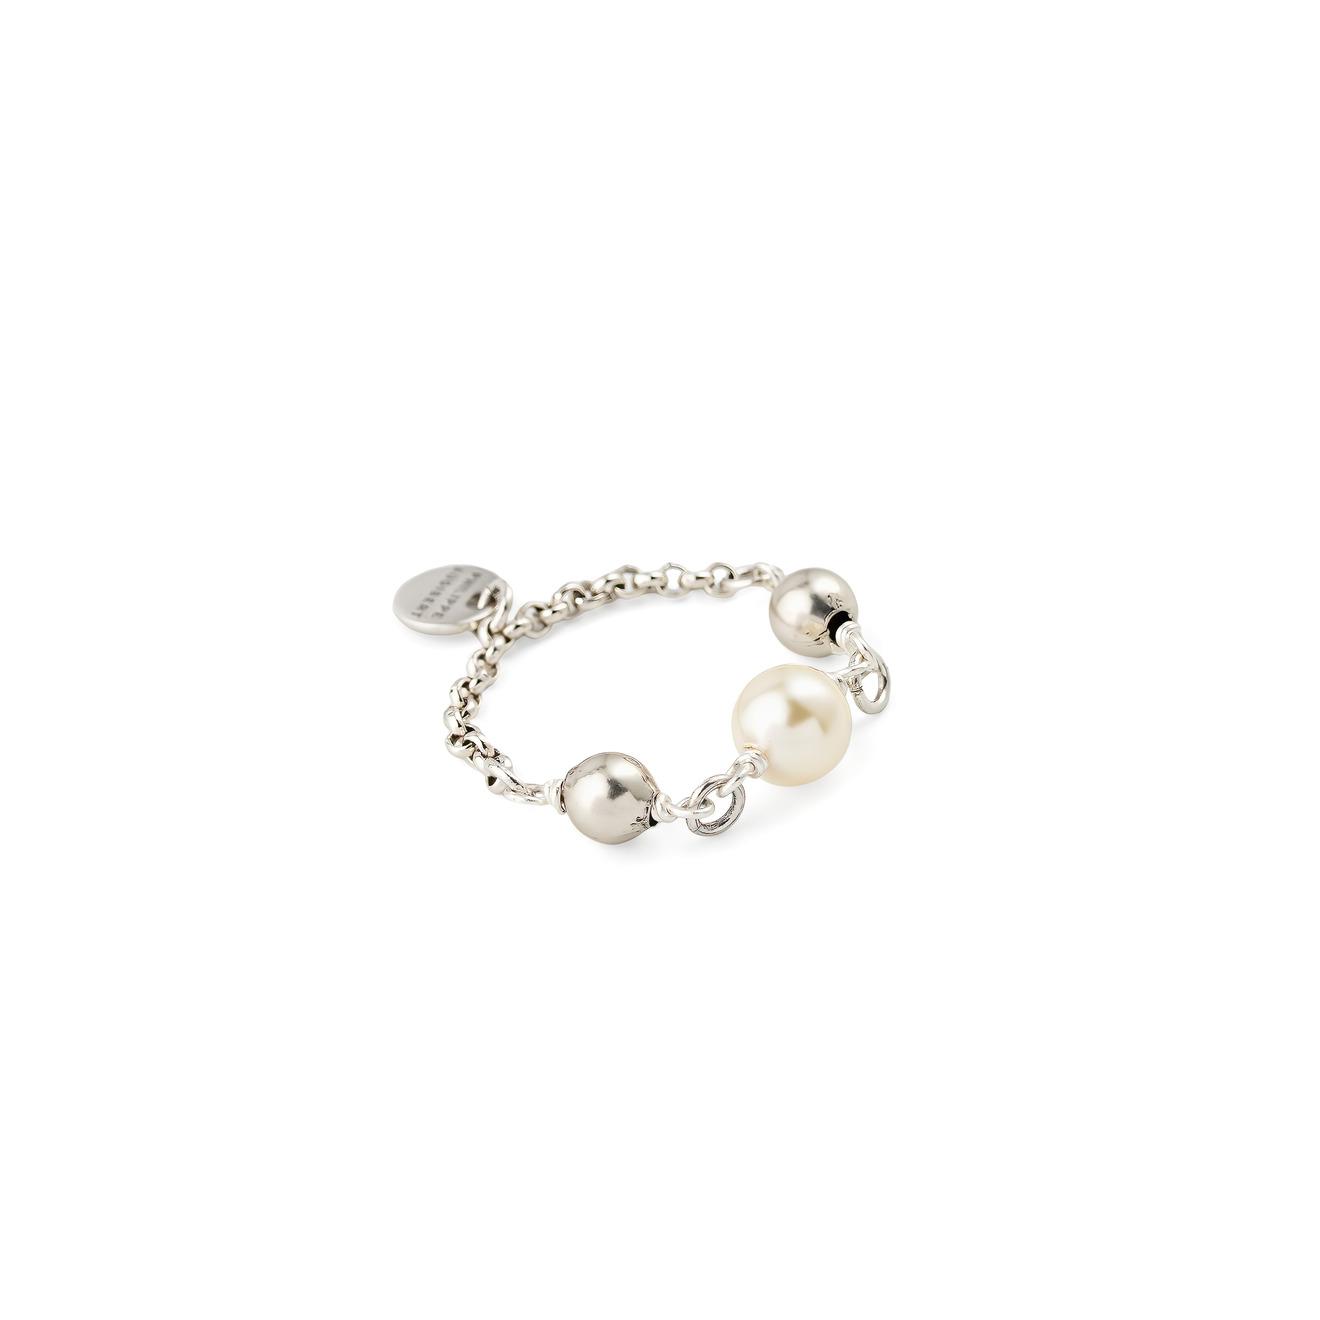 Philippe Audibert Покрытое серебром кольцо-цепь Wilna с шариками и жемчужиной